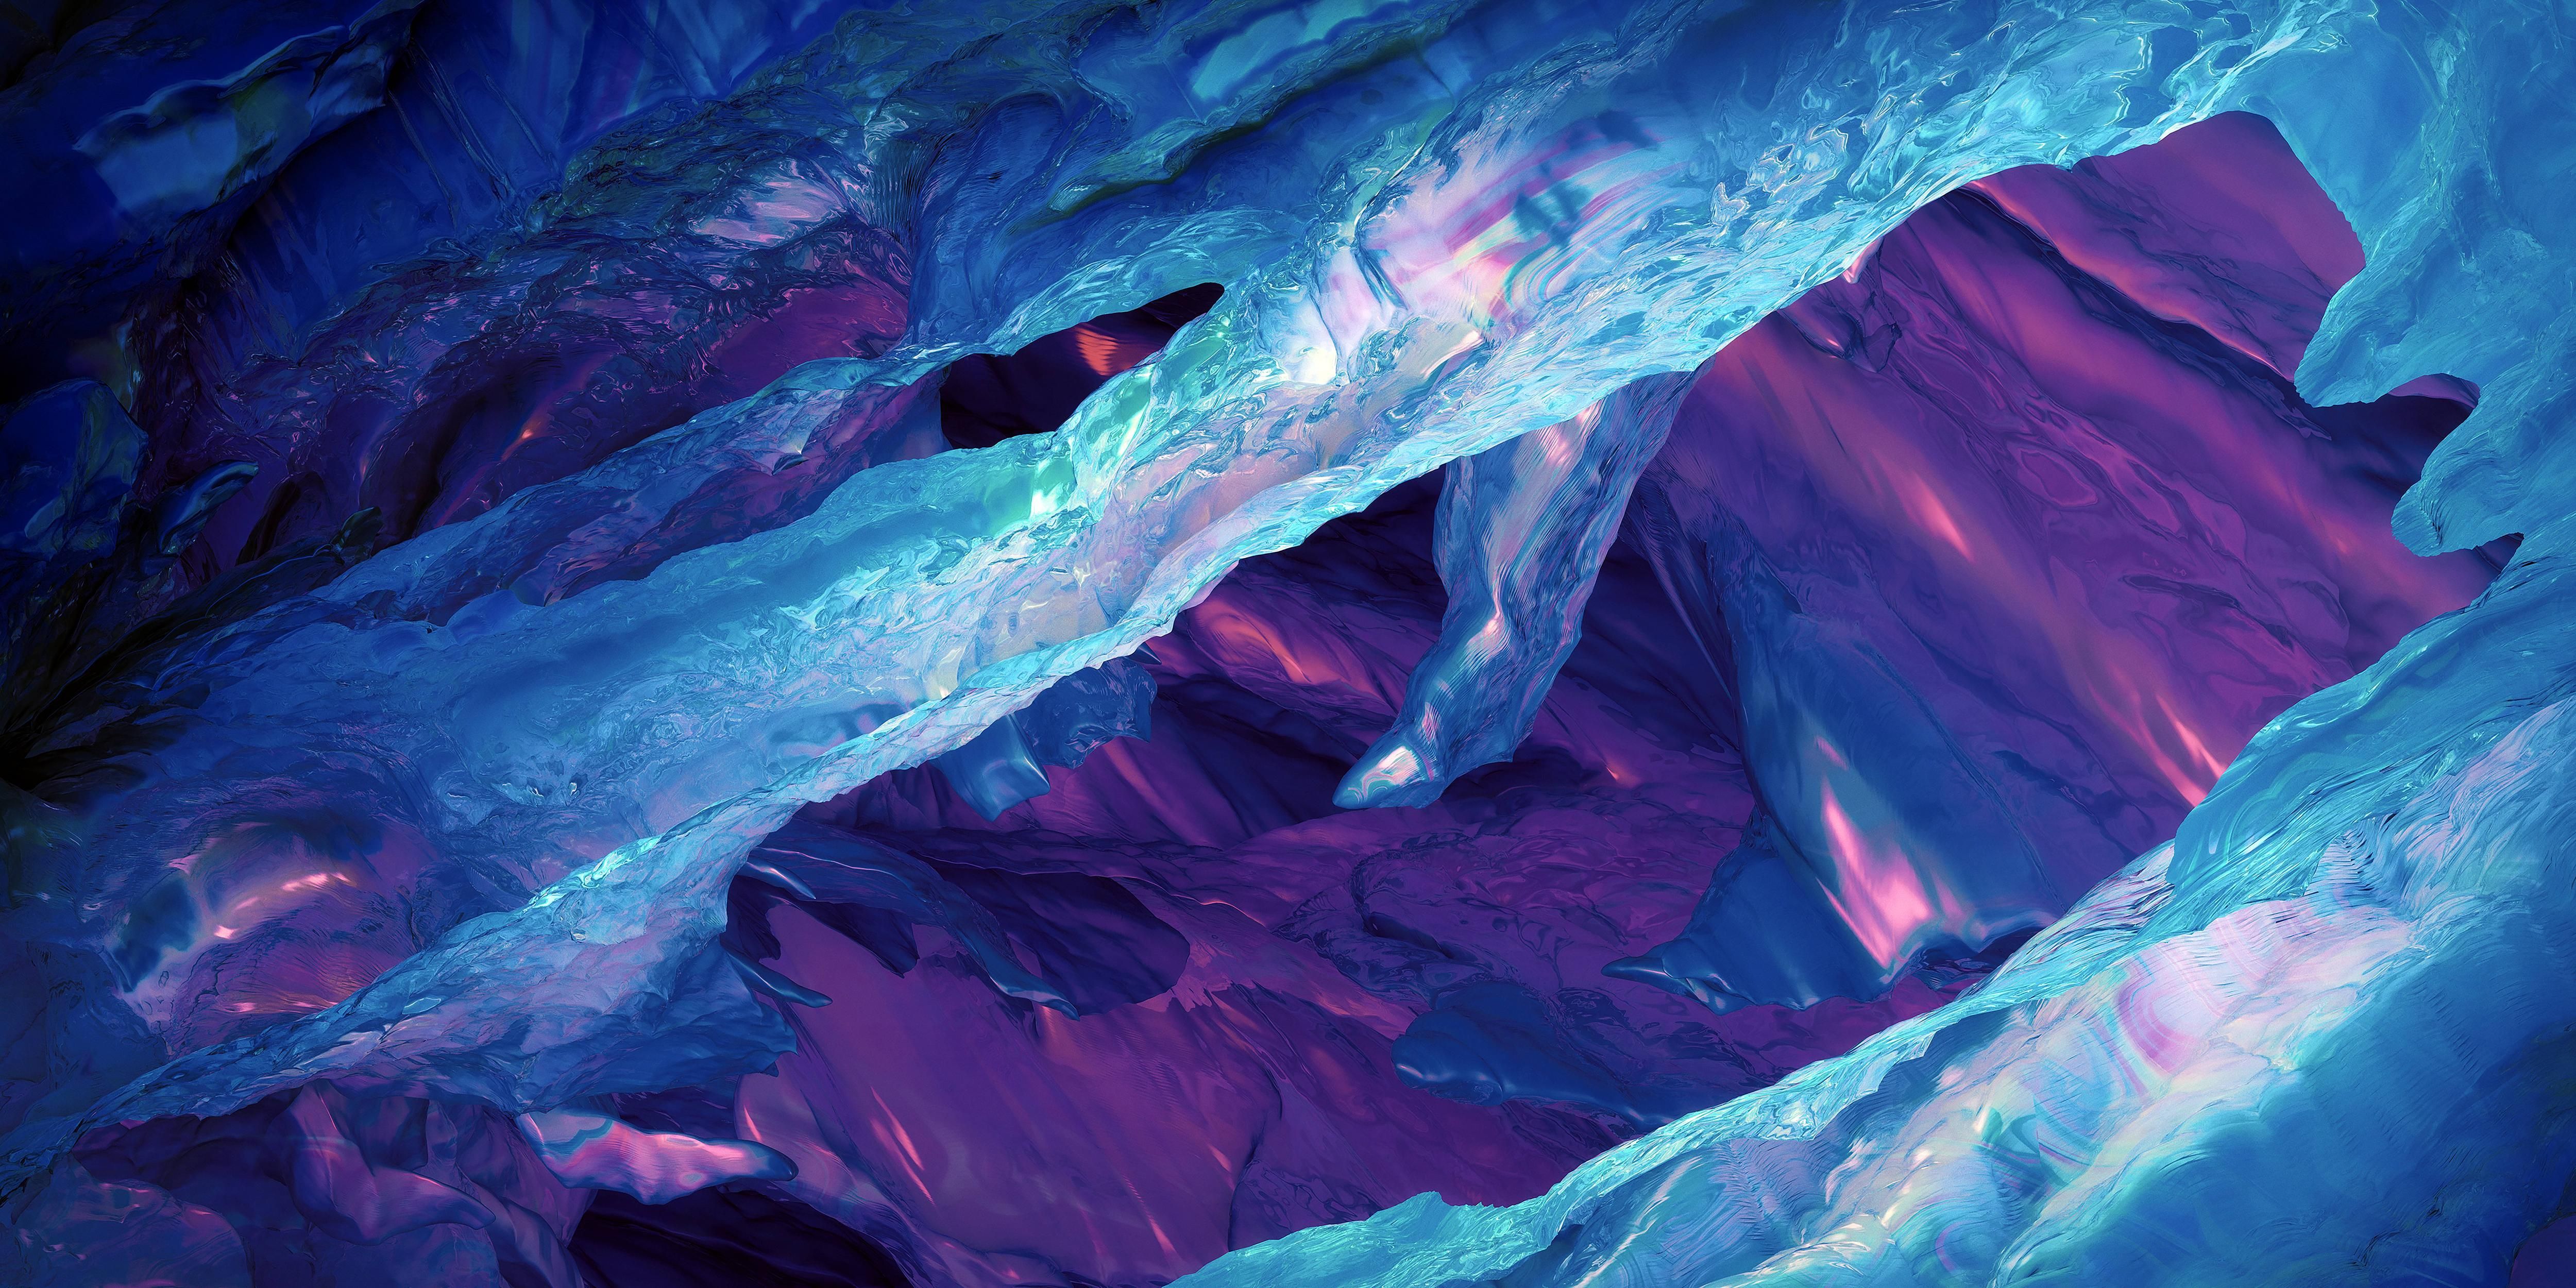 Galactic Crystal 4K wallpaper. Blue background wallpaper, Blue wallpaper, Neon wallpaper